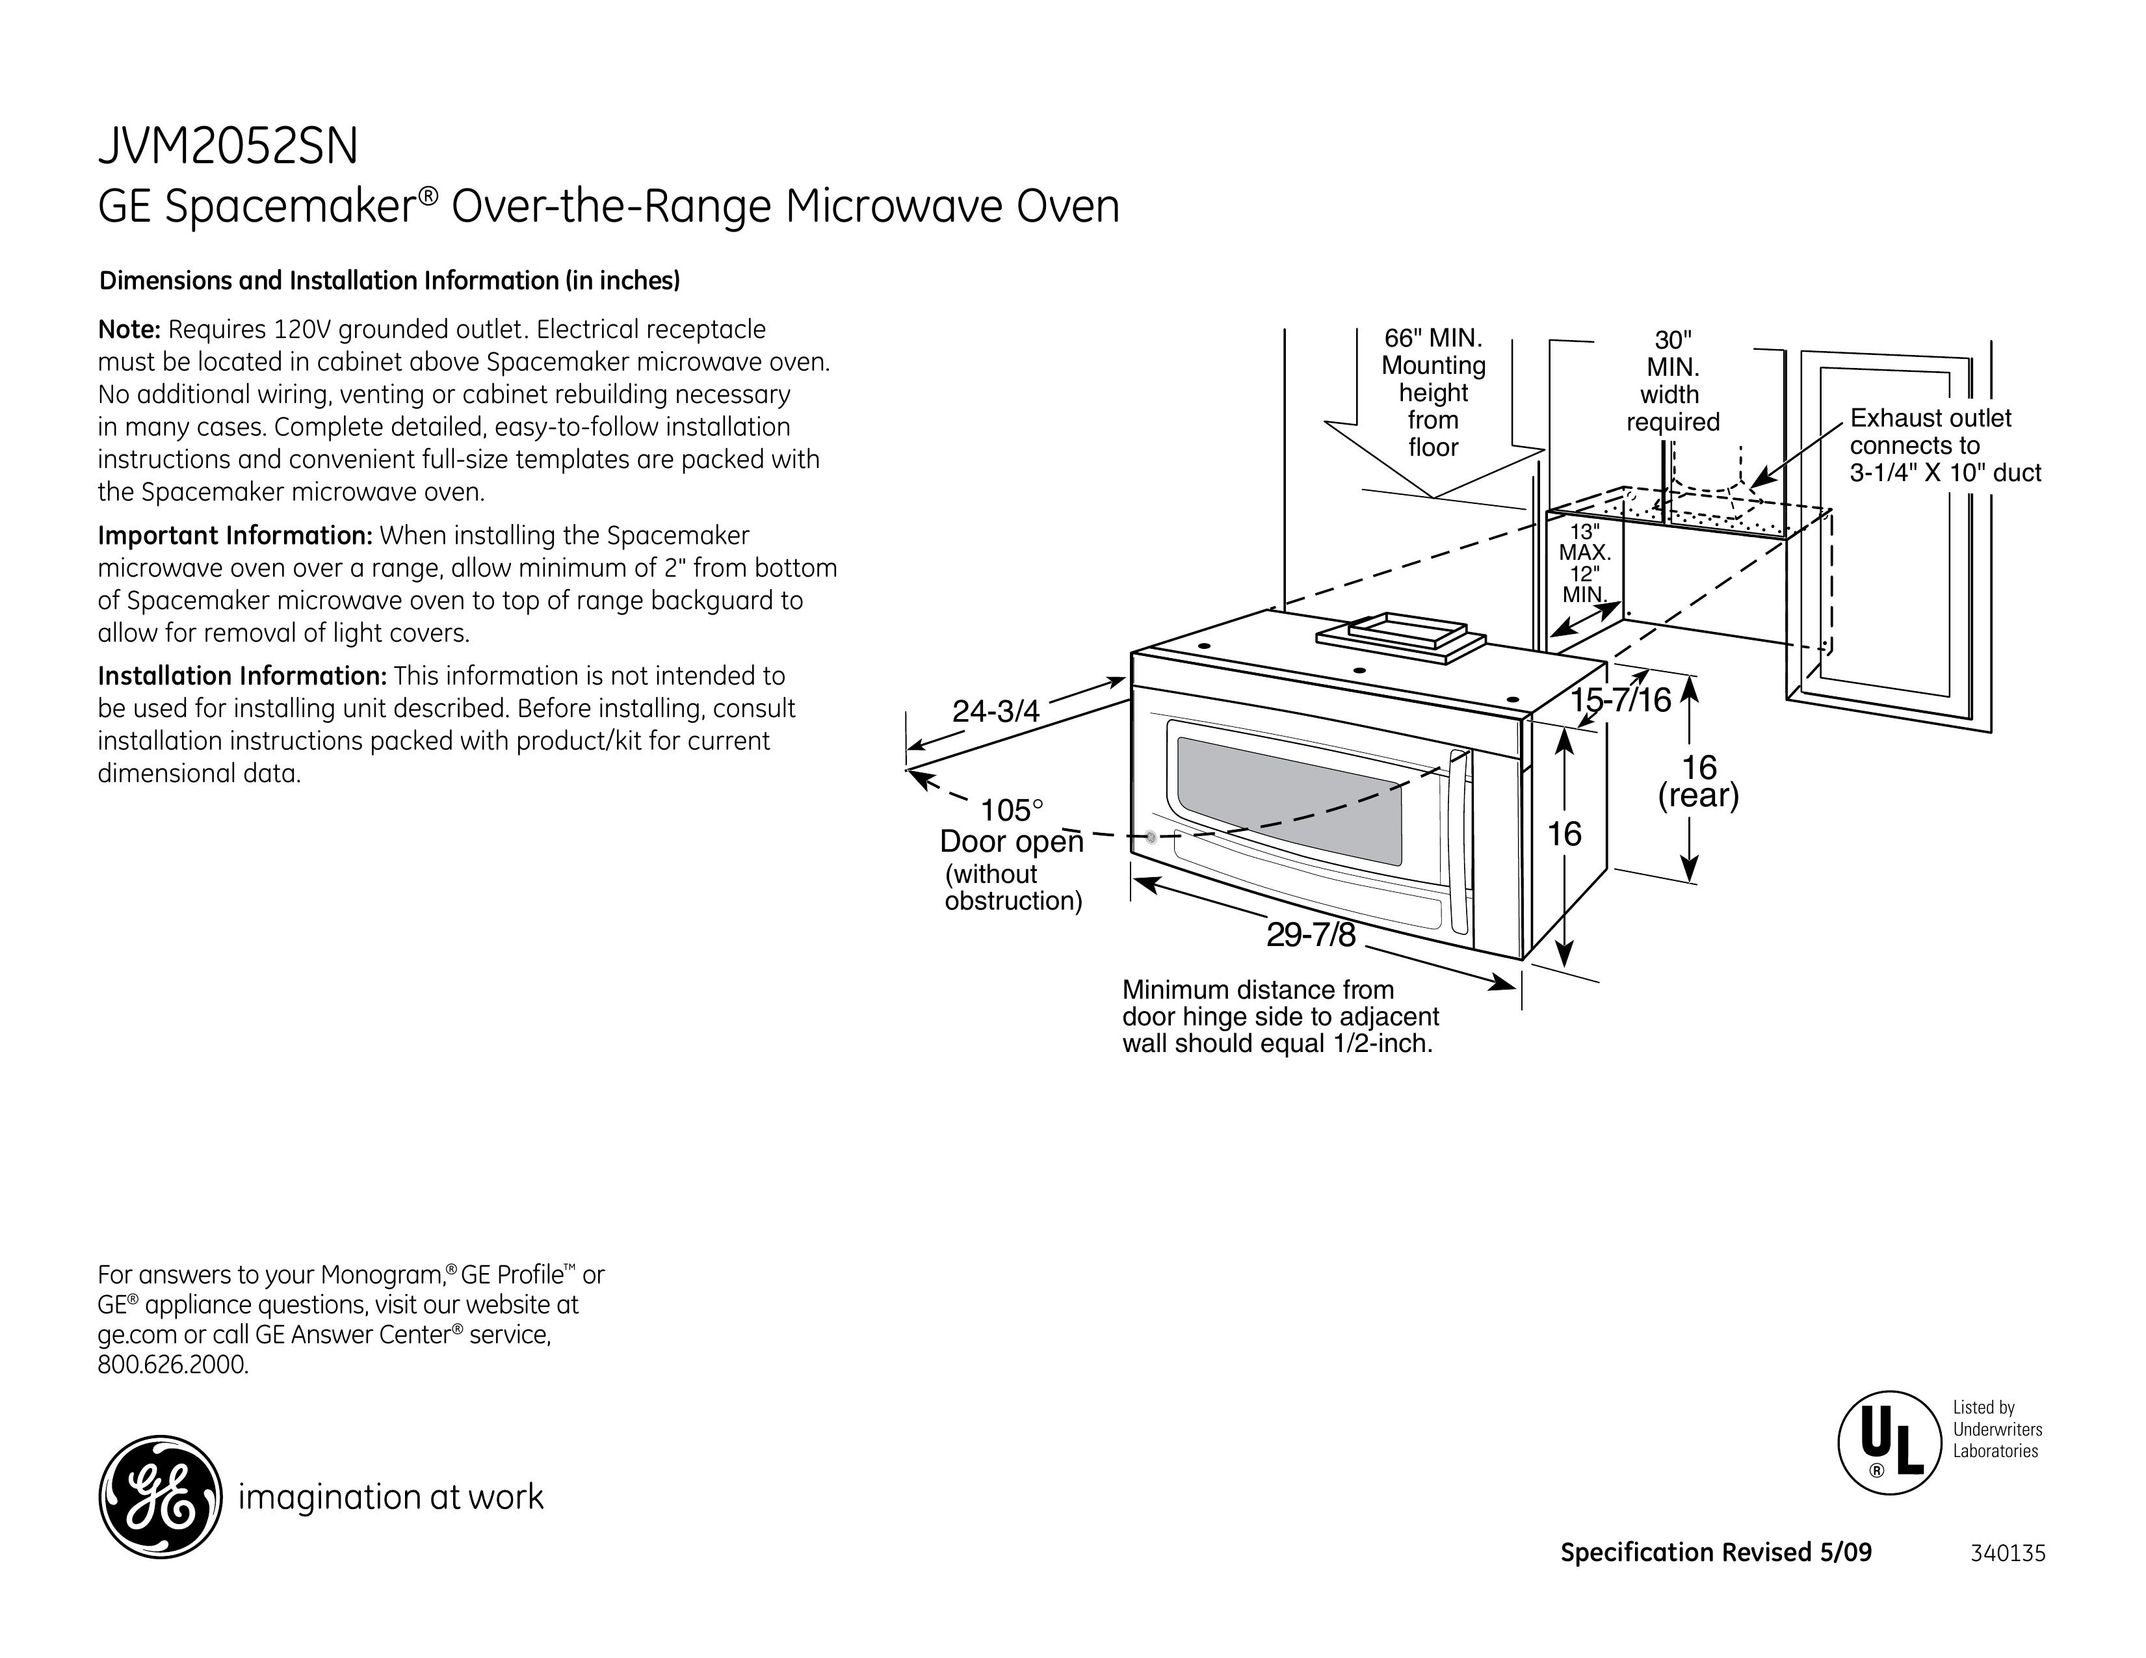 GE 340135 Microwave Oven User Manual